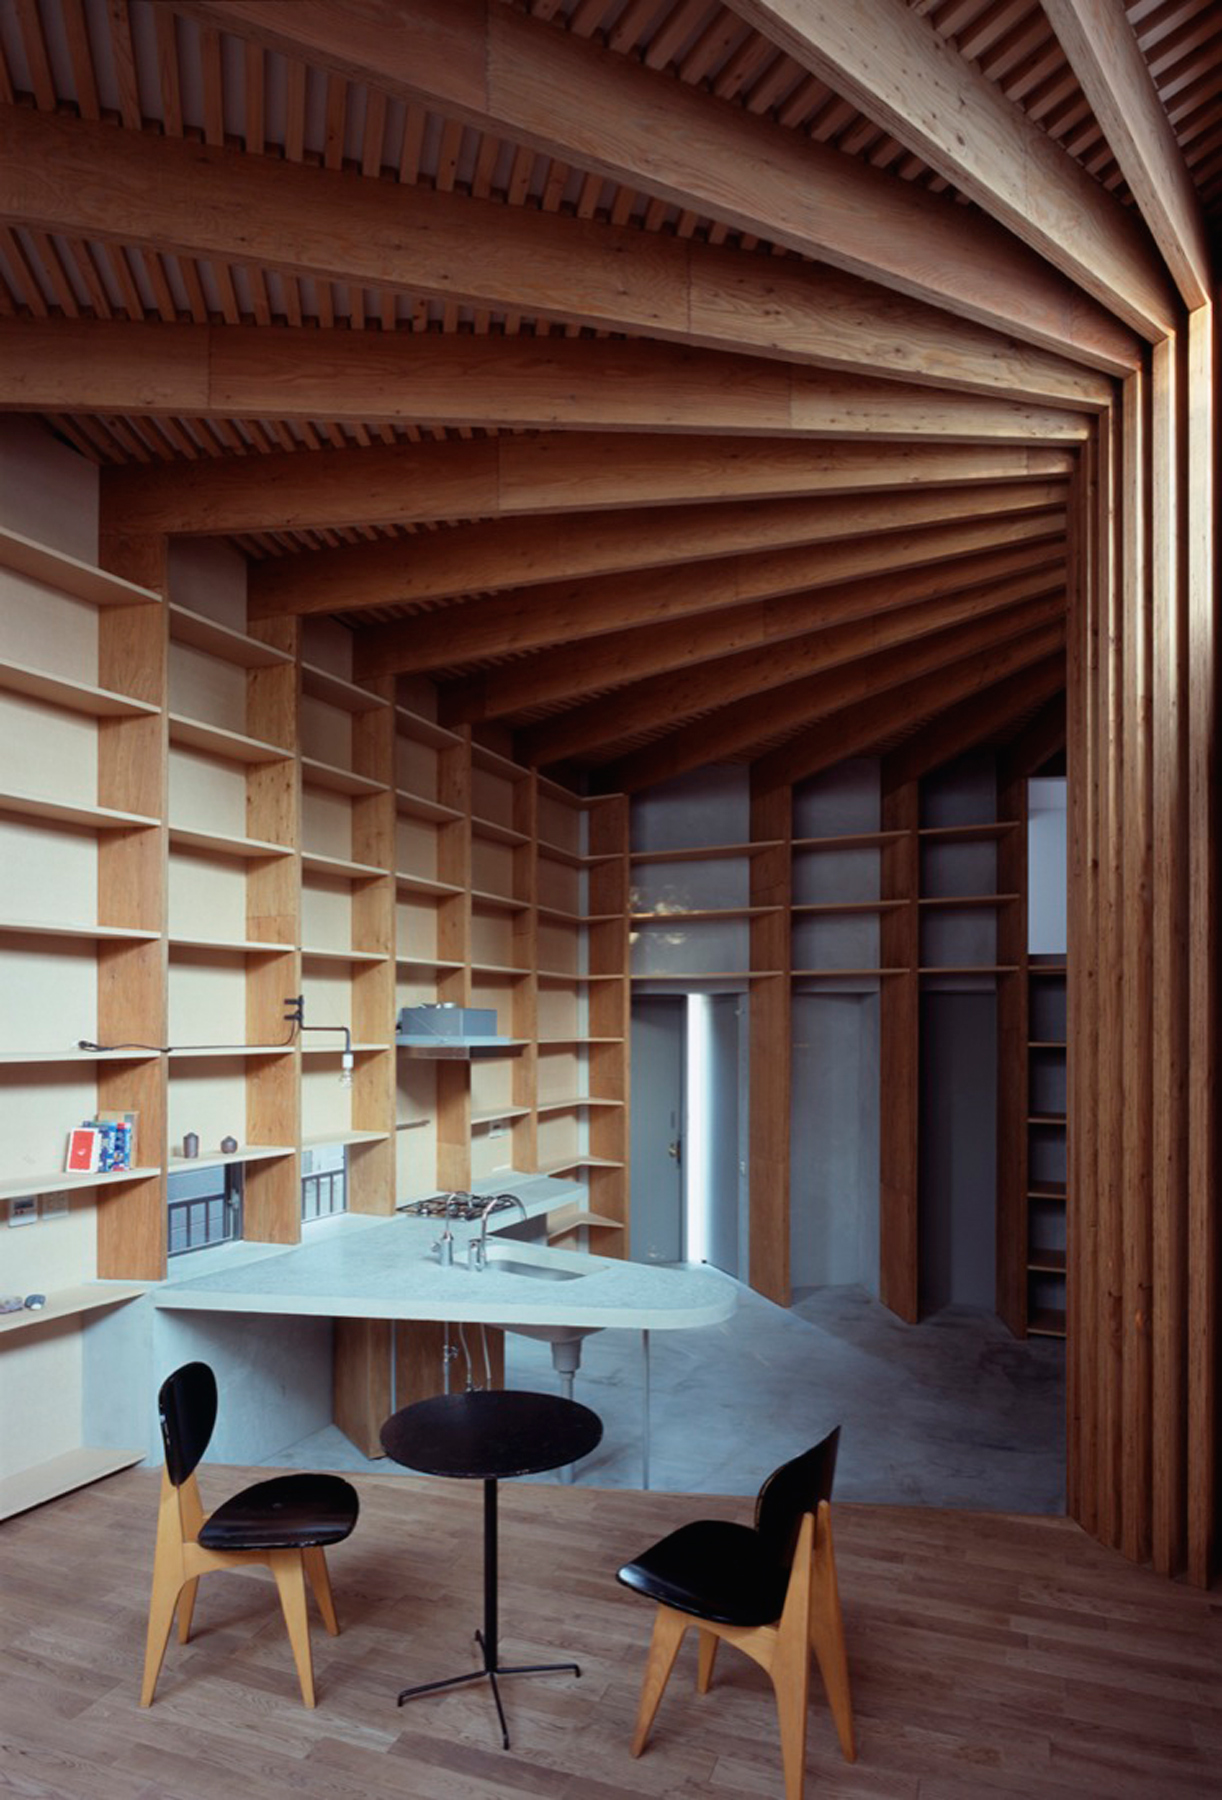 Tree House / Mount Fuji Architects Studio (15)